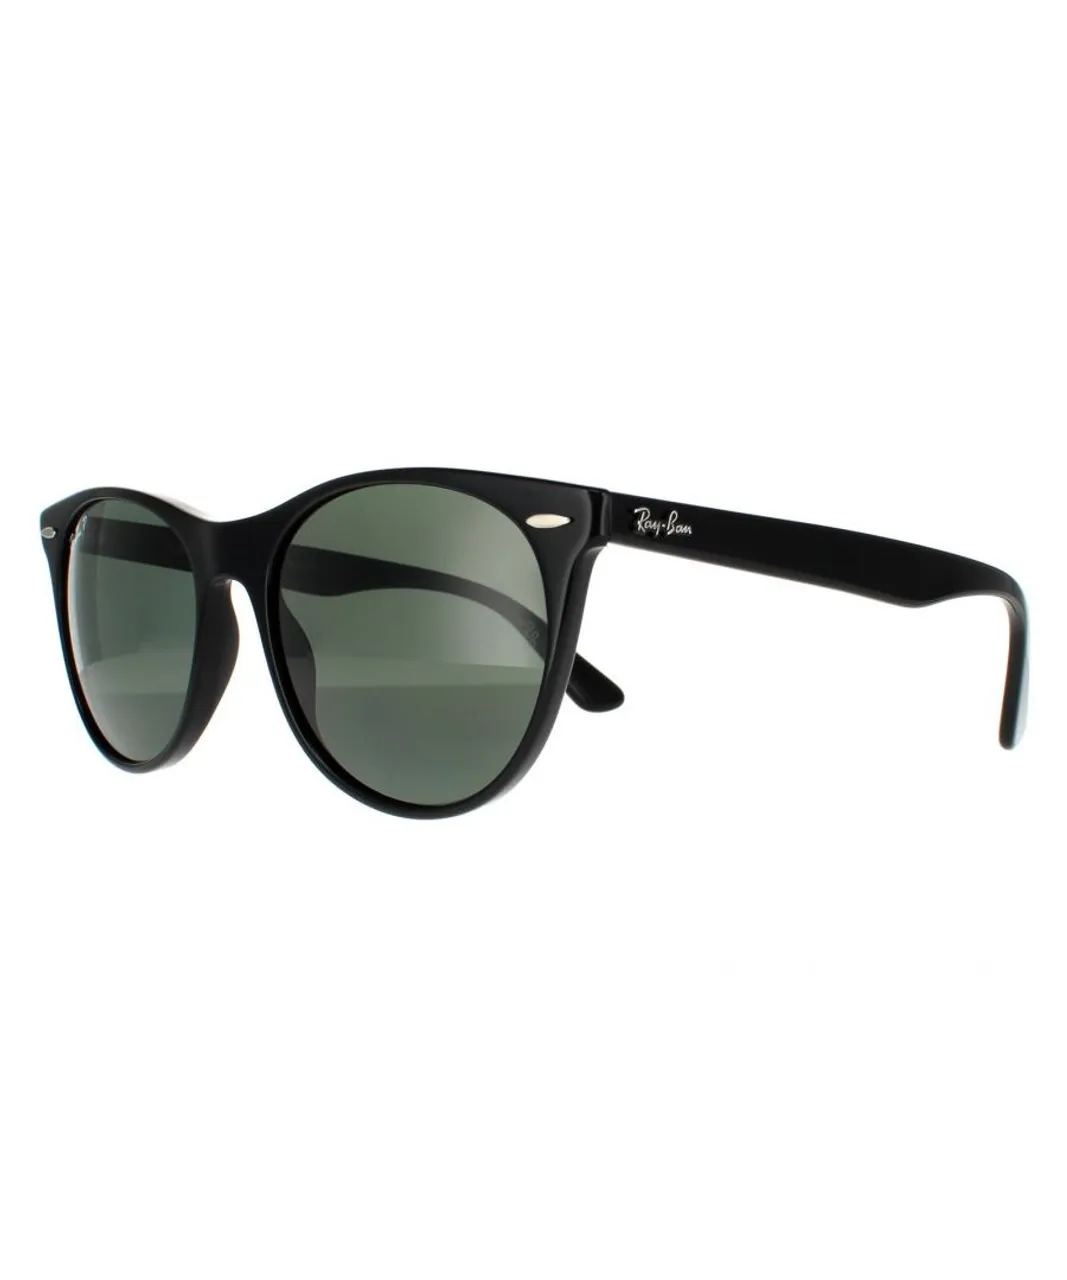 Ray-Ban Round Unisex Black G-15 Green Polarized Sunglasses - One